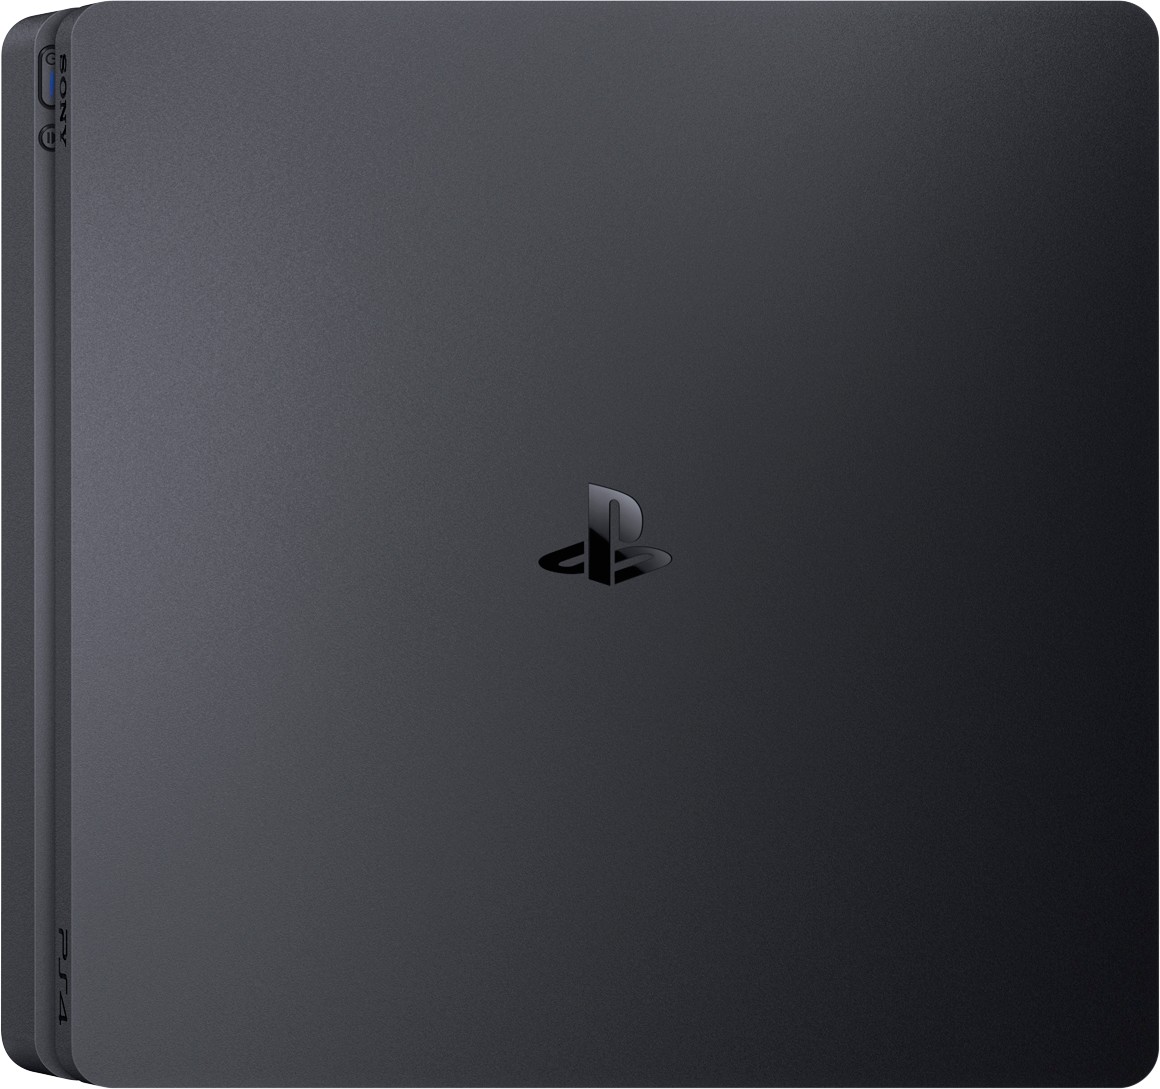 PlayStation 4 Slim (500GB, Jet Black)